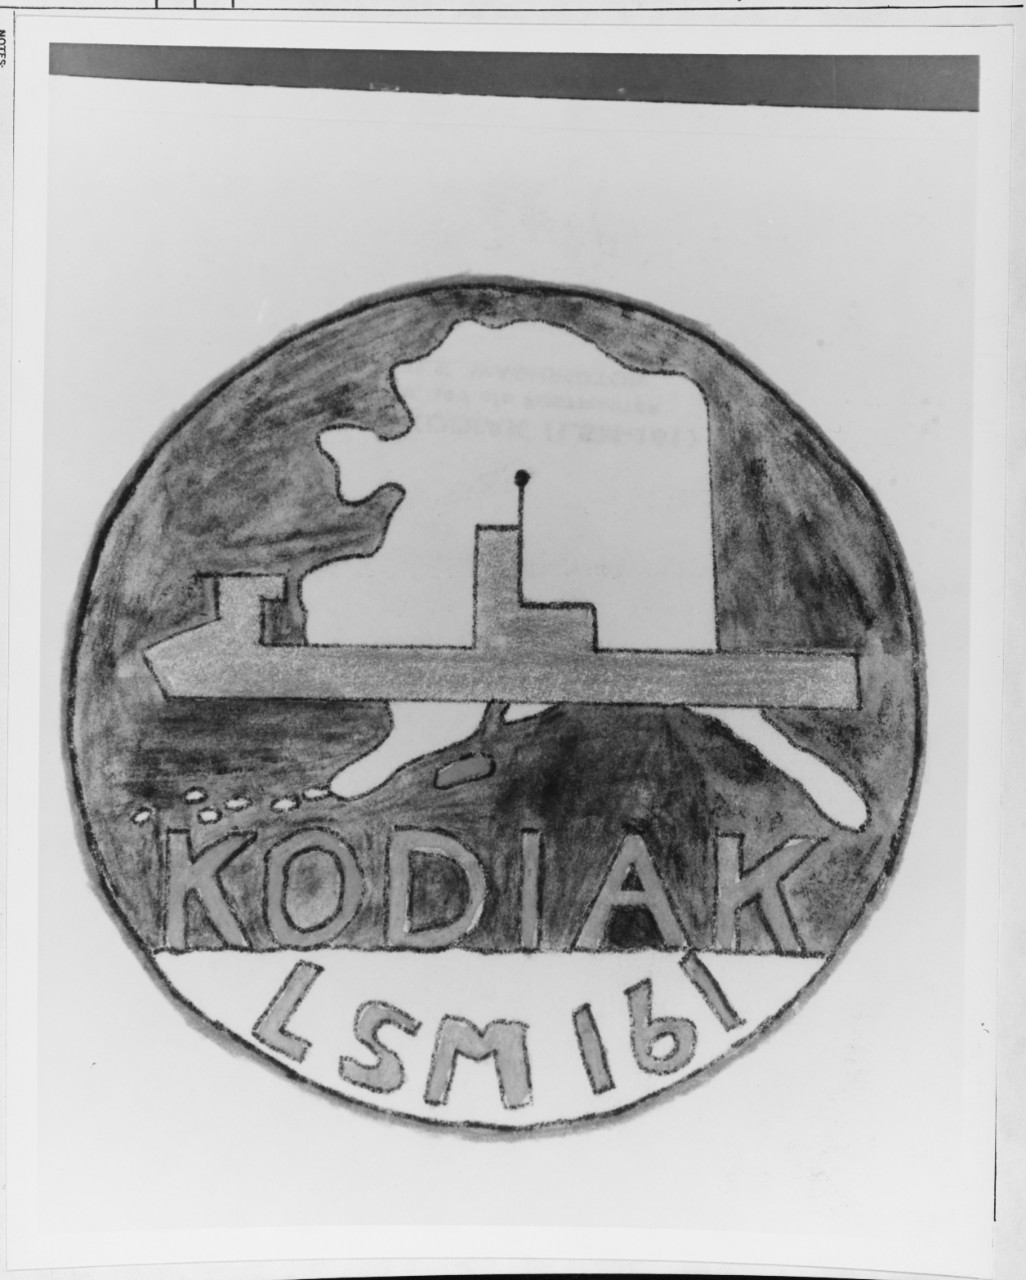 Insignia:  USS KODIAK (LSM-161)